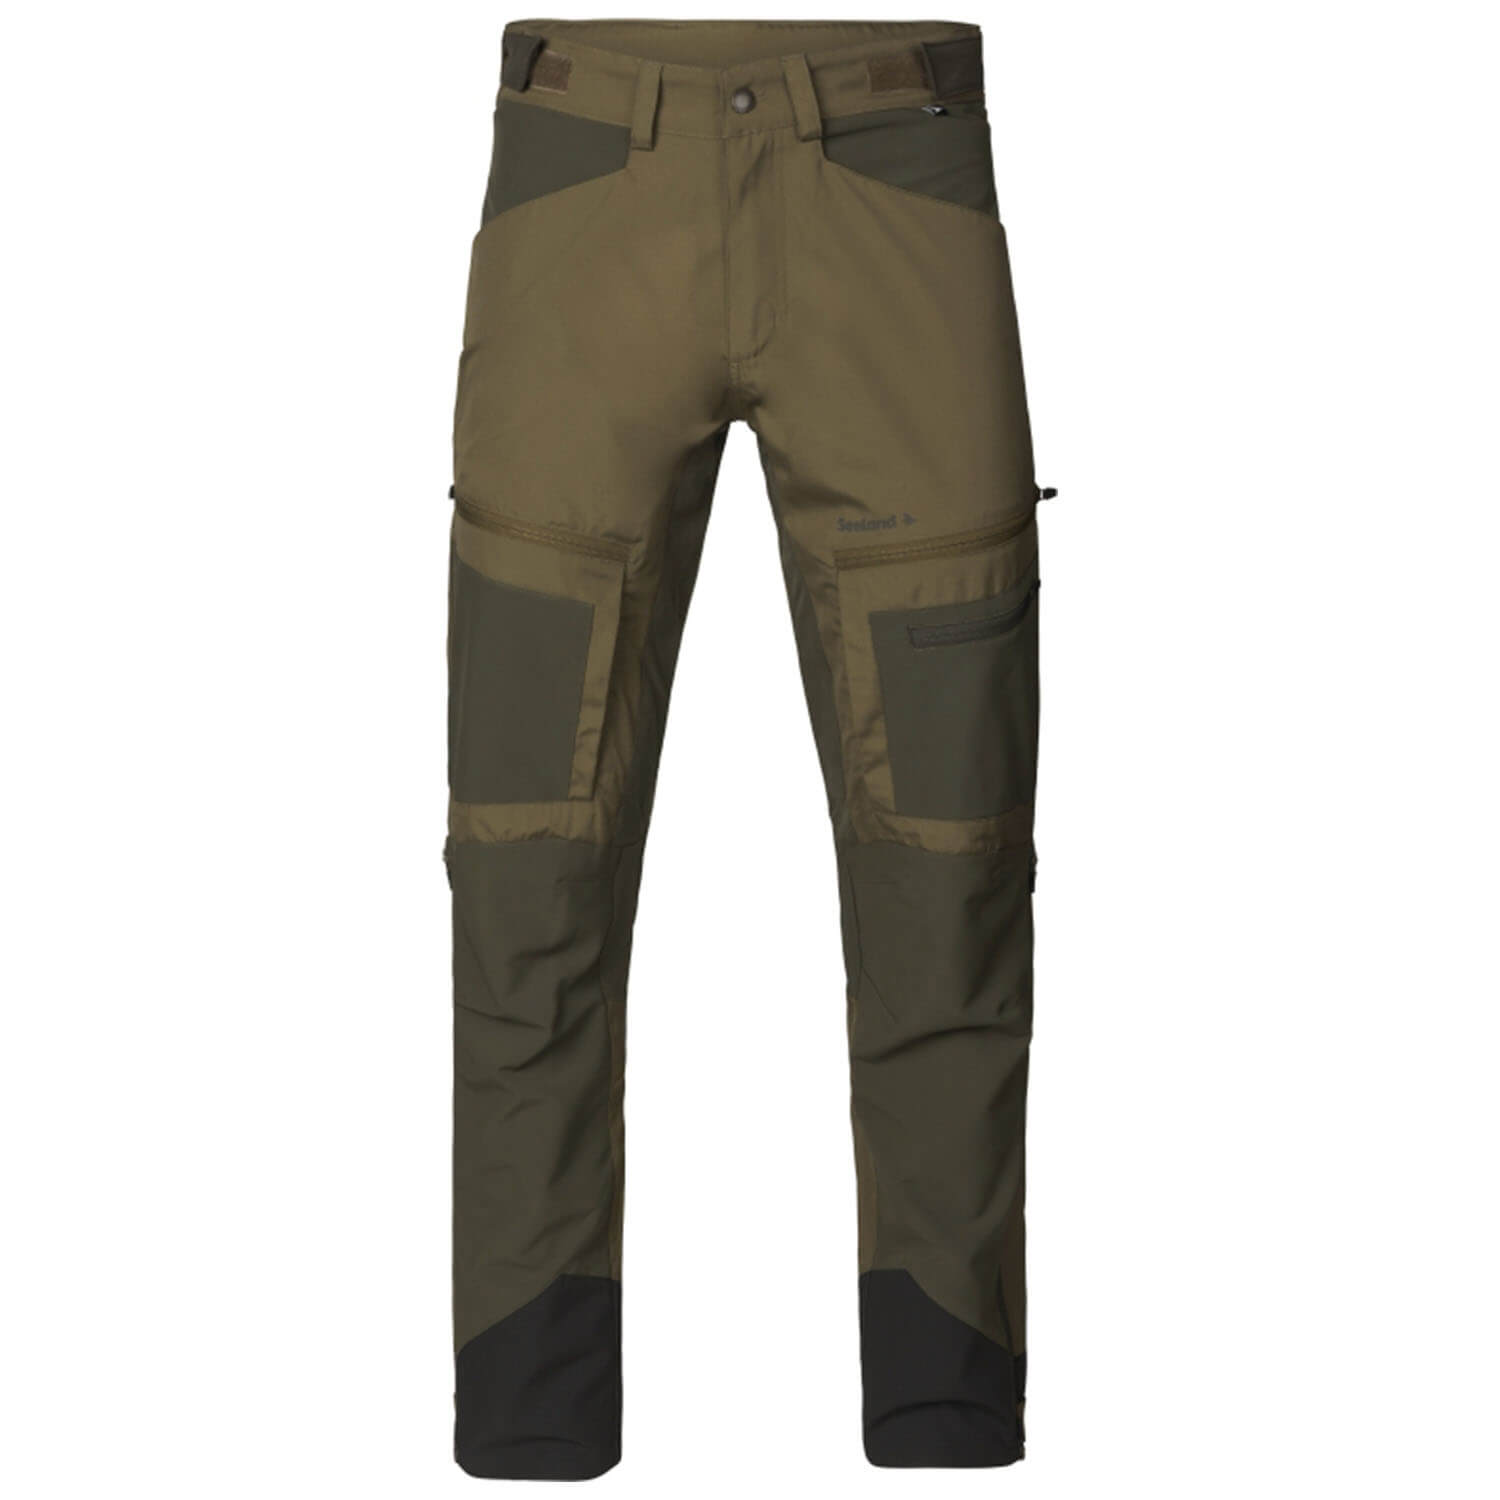 Seeland pants hemlock (Military Olive/Pine Green) - Hunting Trousers